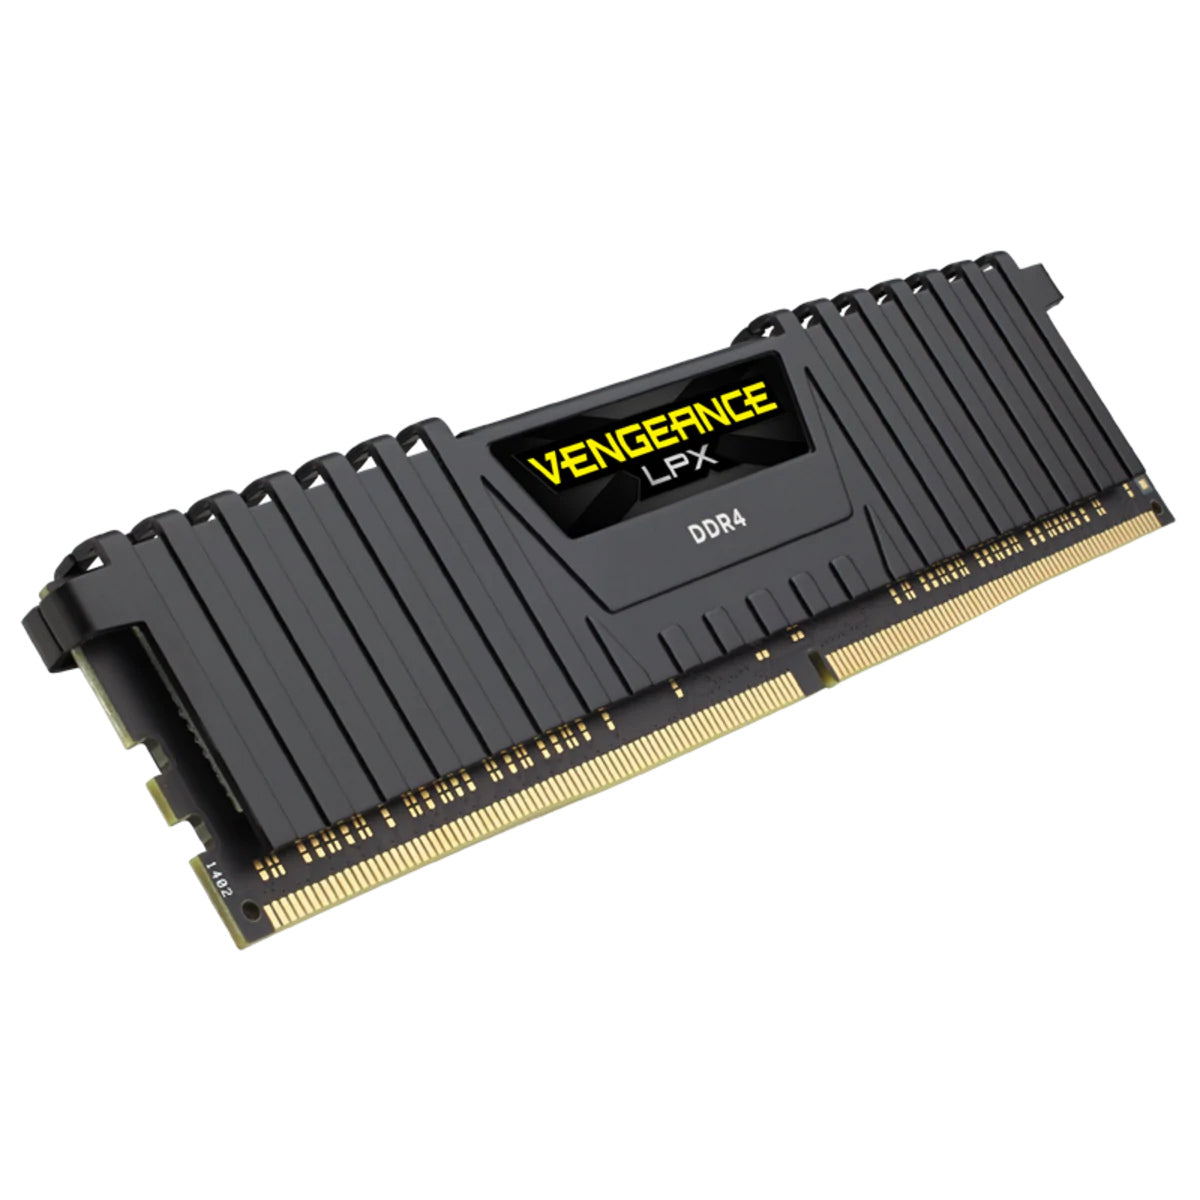 Corsair Vengeance LPX RAM 8GB DDR4 RAM 3600MHz डेस्कटॉप मेमोरी